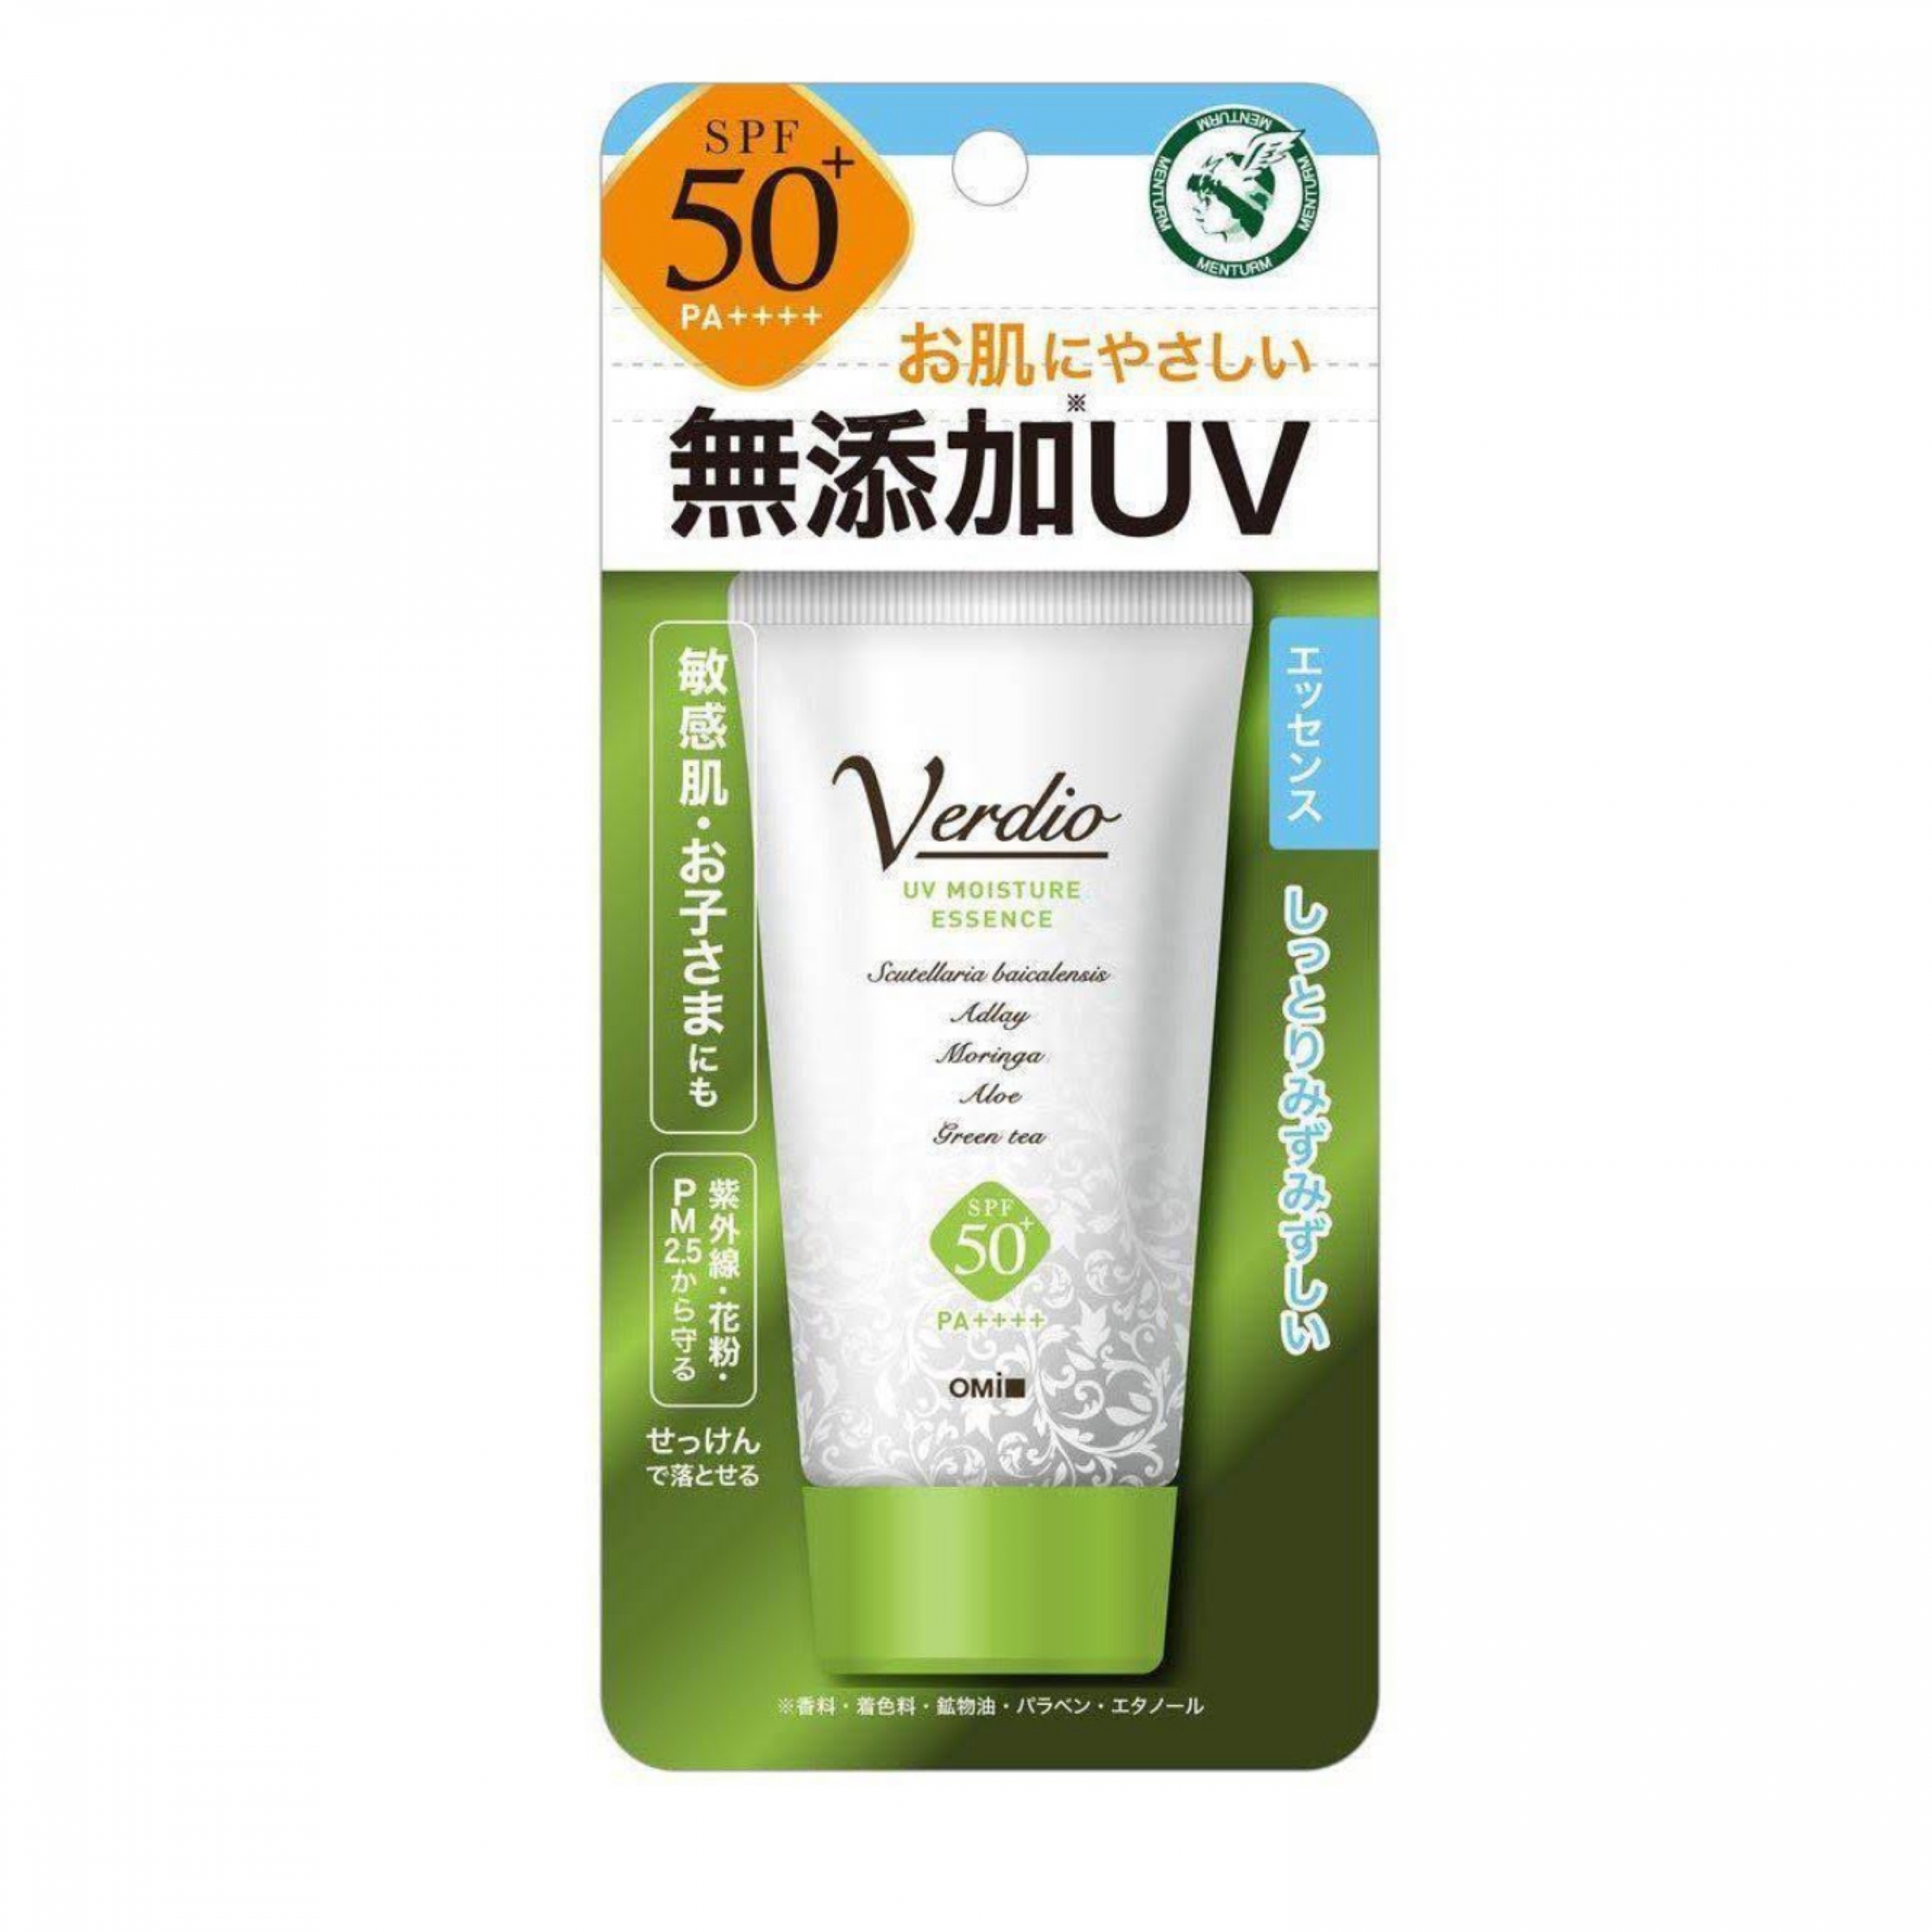 Essence 50 spf. Pa Japanese System Sunscreen. Japan Omi.